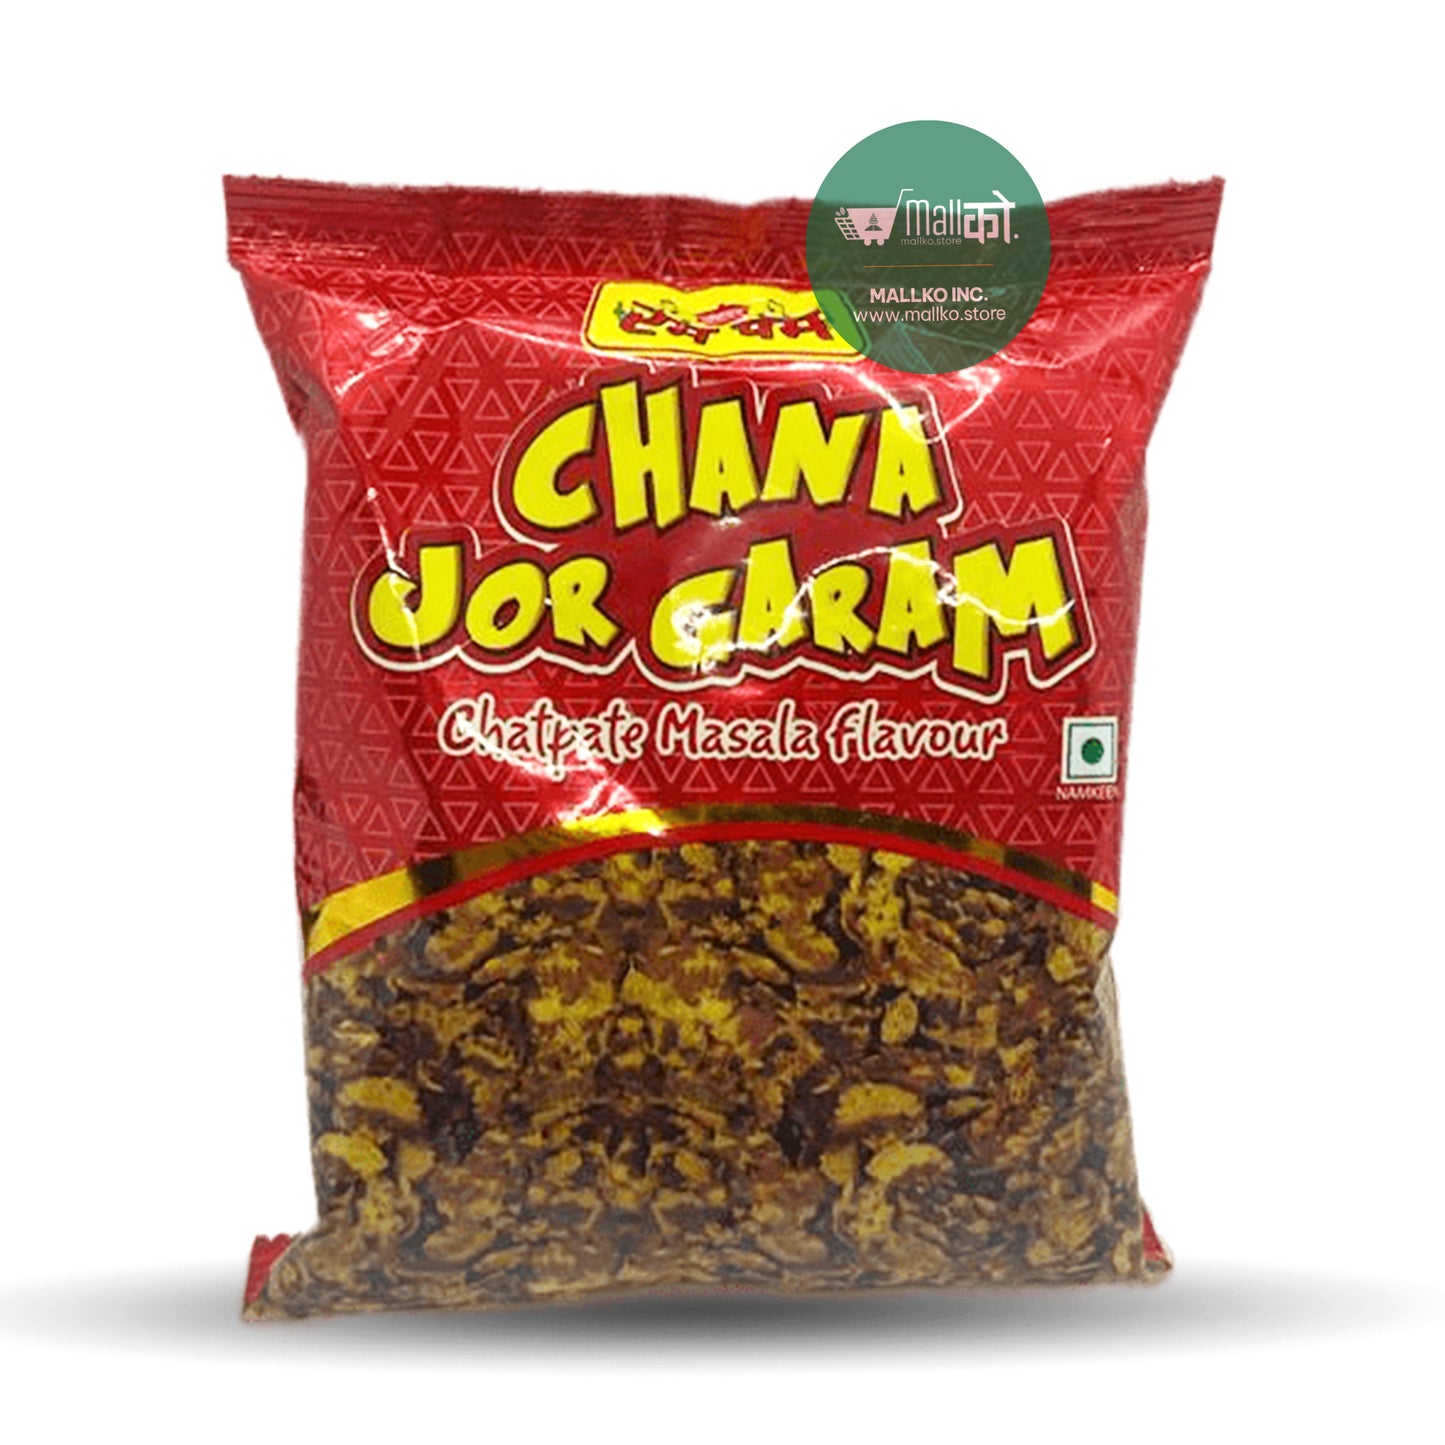 Chana Jor Garam Fried Chatpate Masala flavor